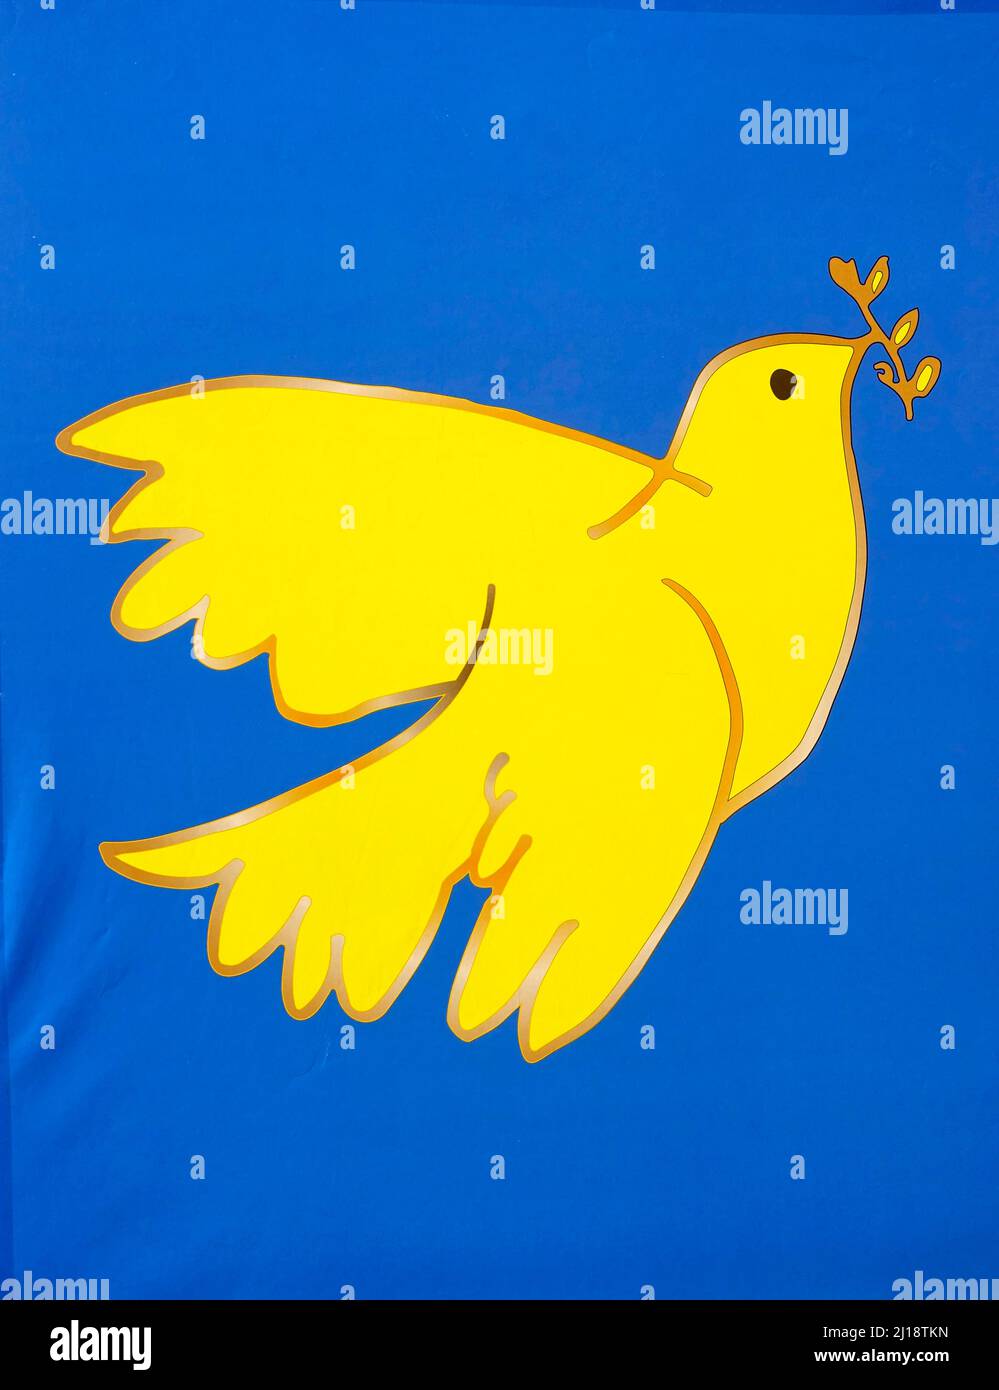 https://c8.alamy.com/comp/2J18TKN/poster-with-dove-of-peace-national-colors-of-ukraine-2J18TKN.jpg